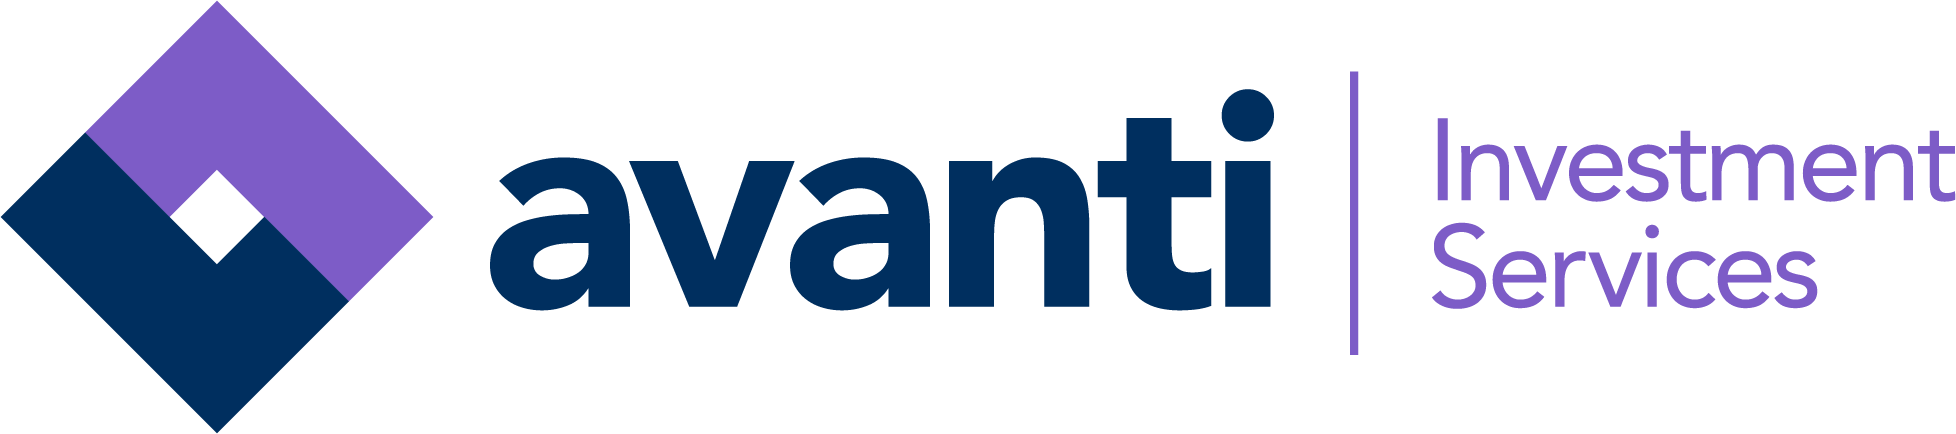 Avanti Investment Service Logo